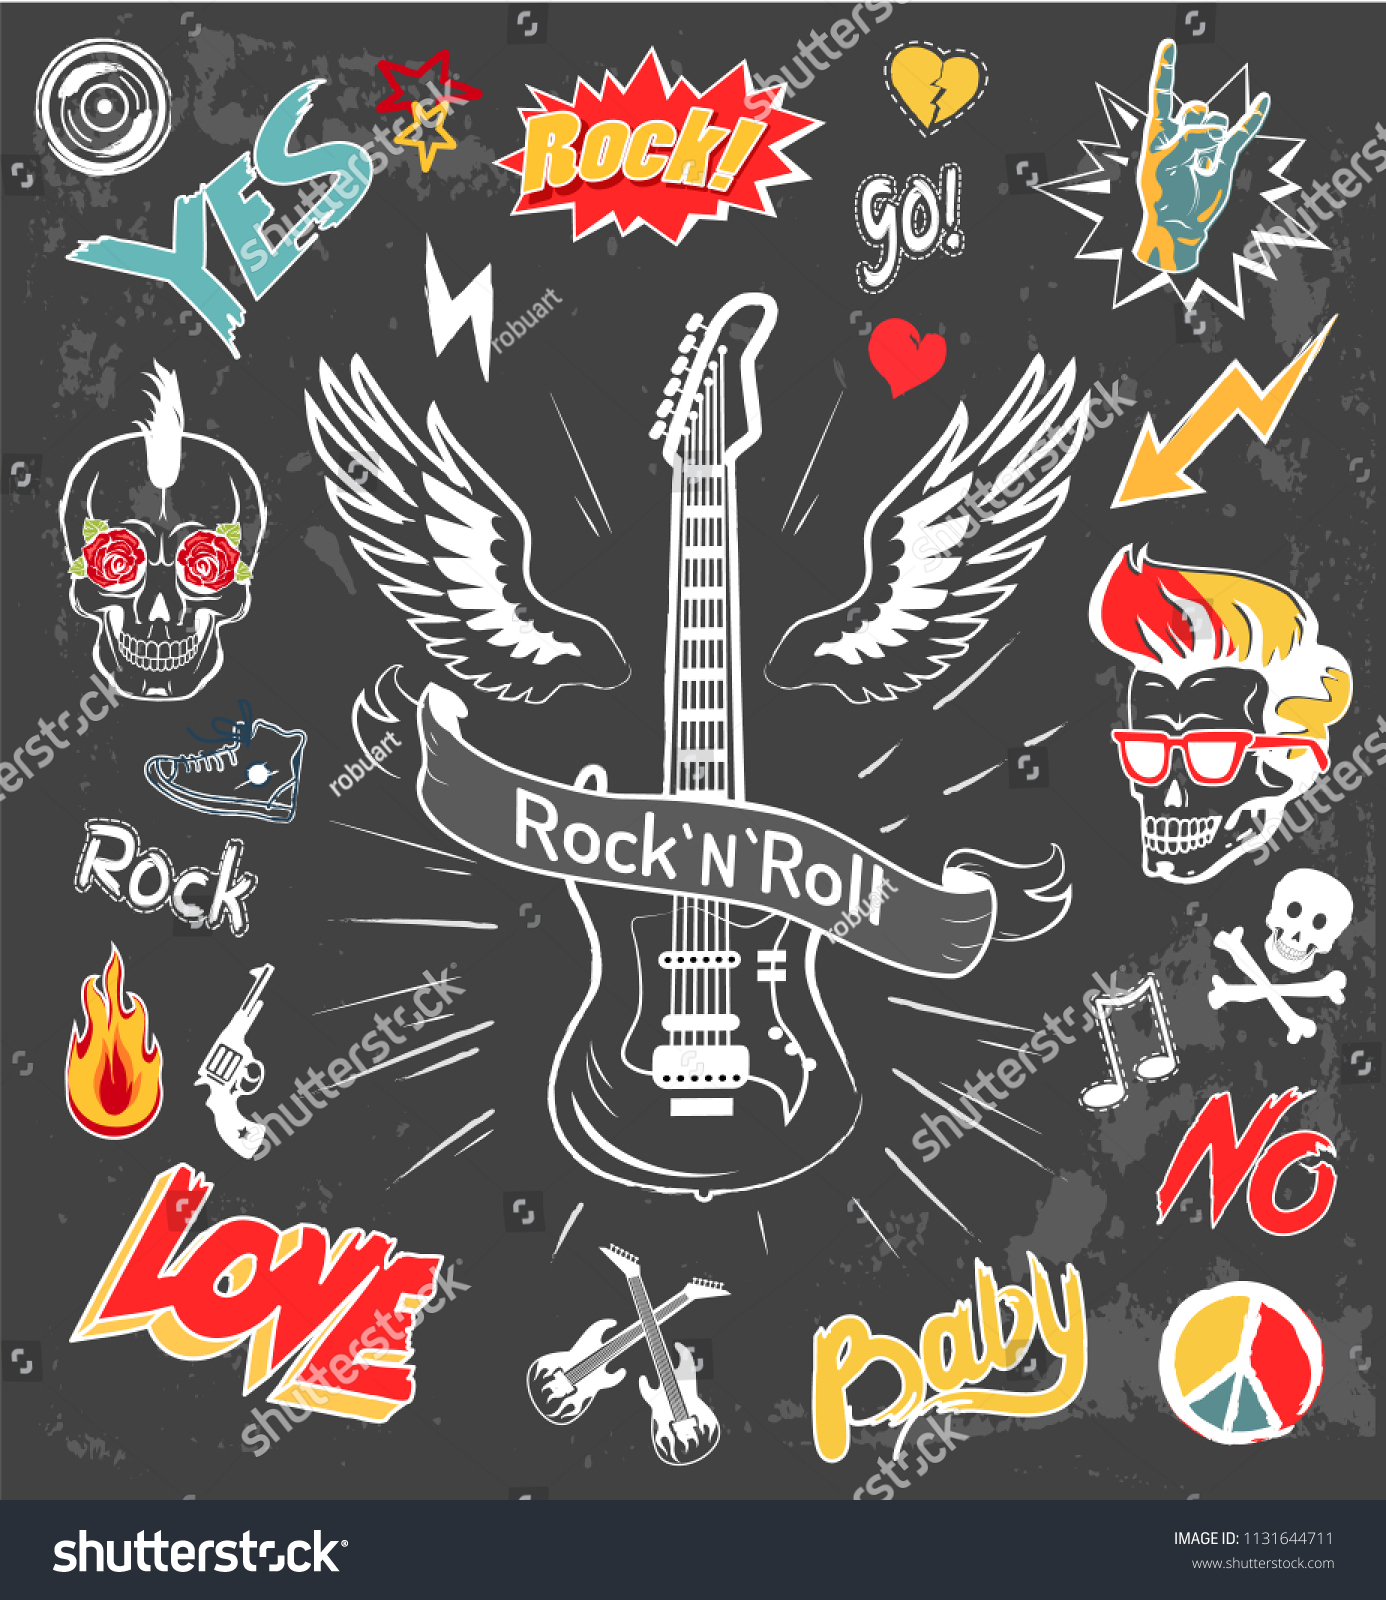 Rock i roll. Символ рок н ролла. Рок символы. Надпись рок-н-ролл. Надписи в стиле рок н ролл.